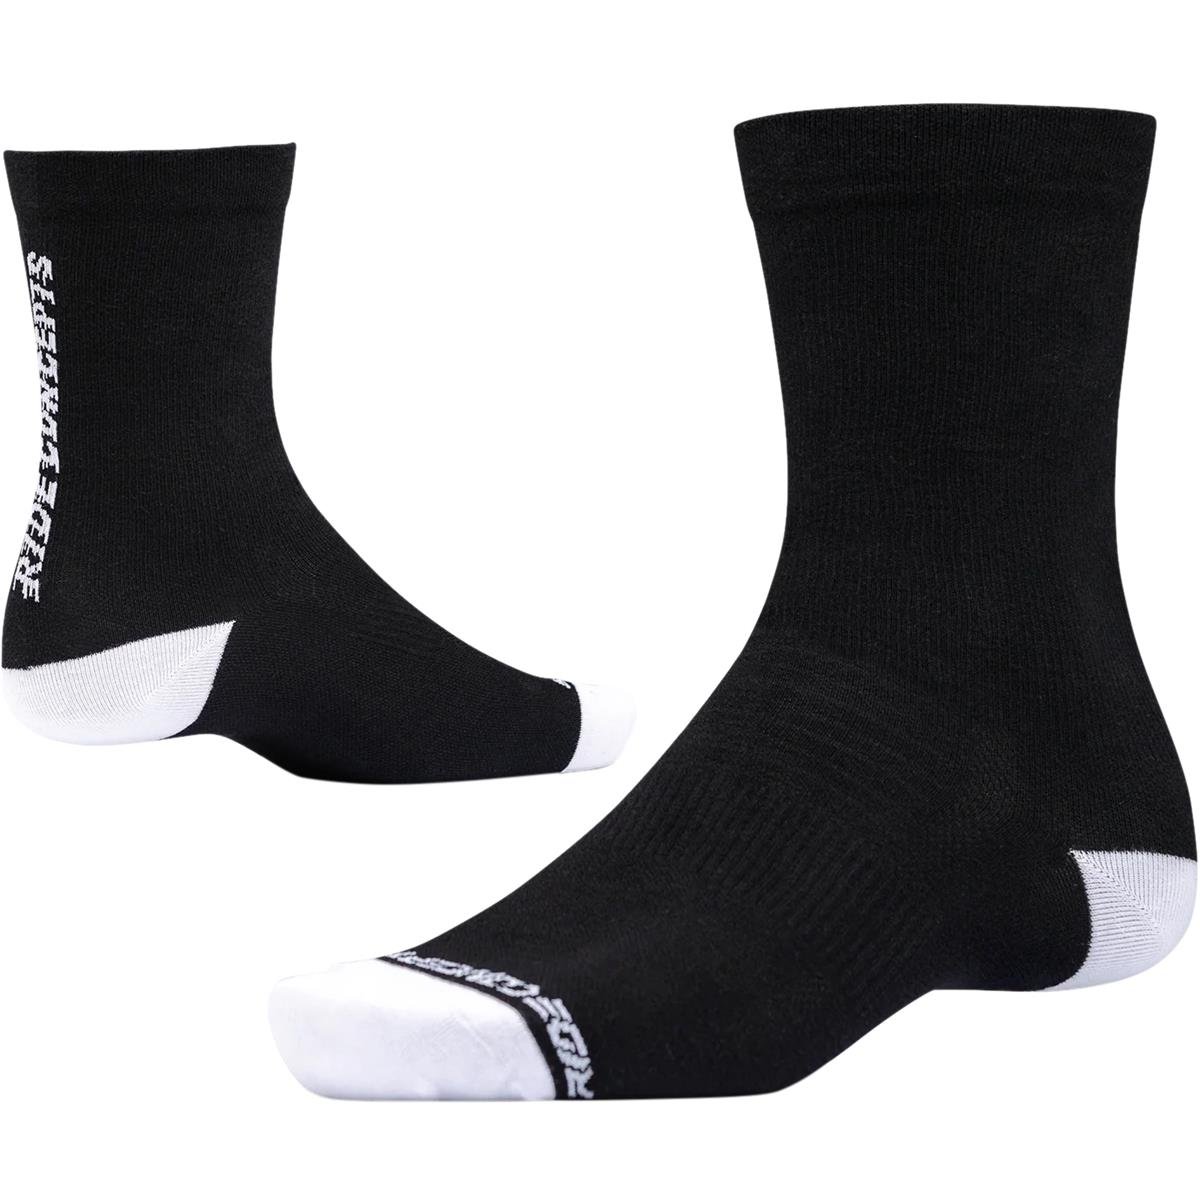 Ride Concepts MTB Socks R.E.D. Black/White